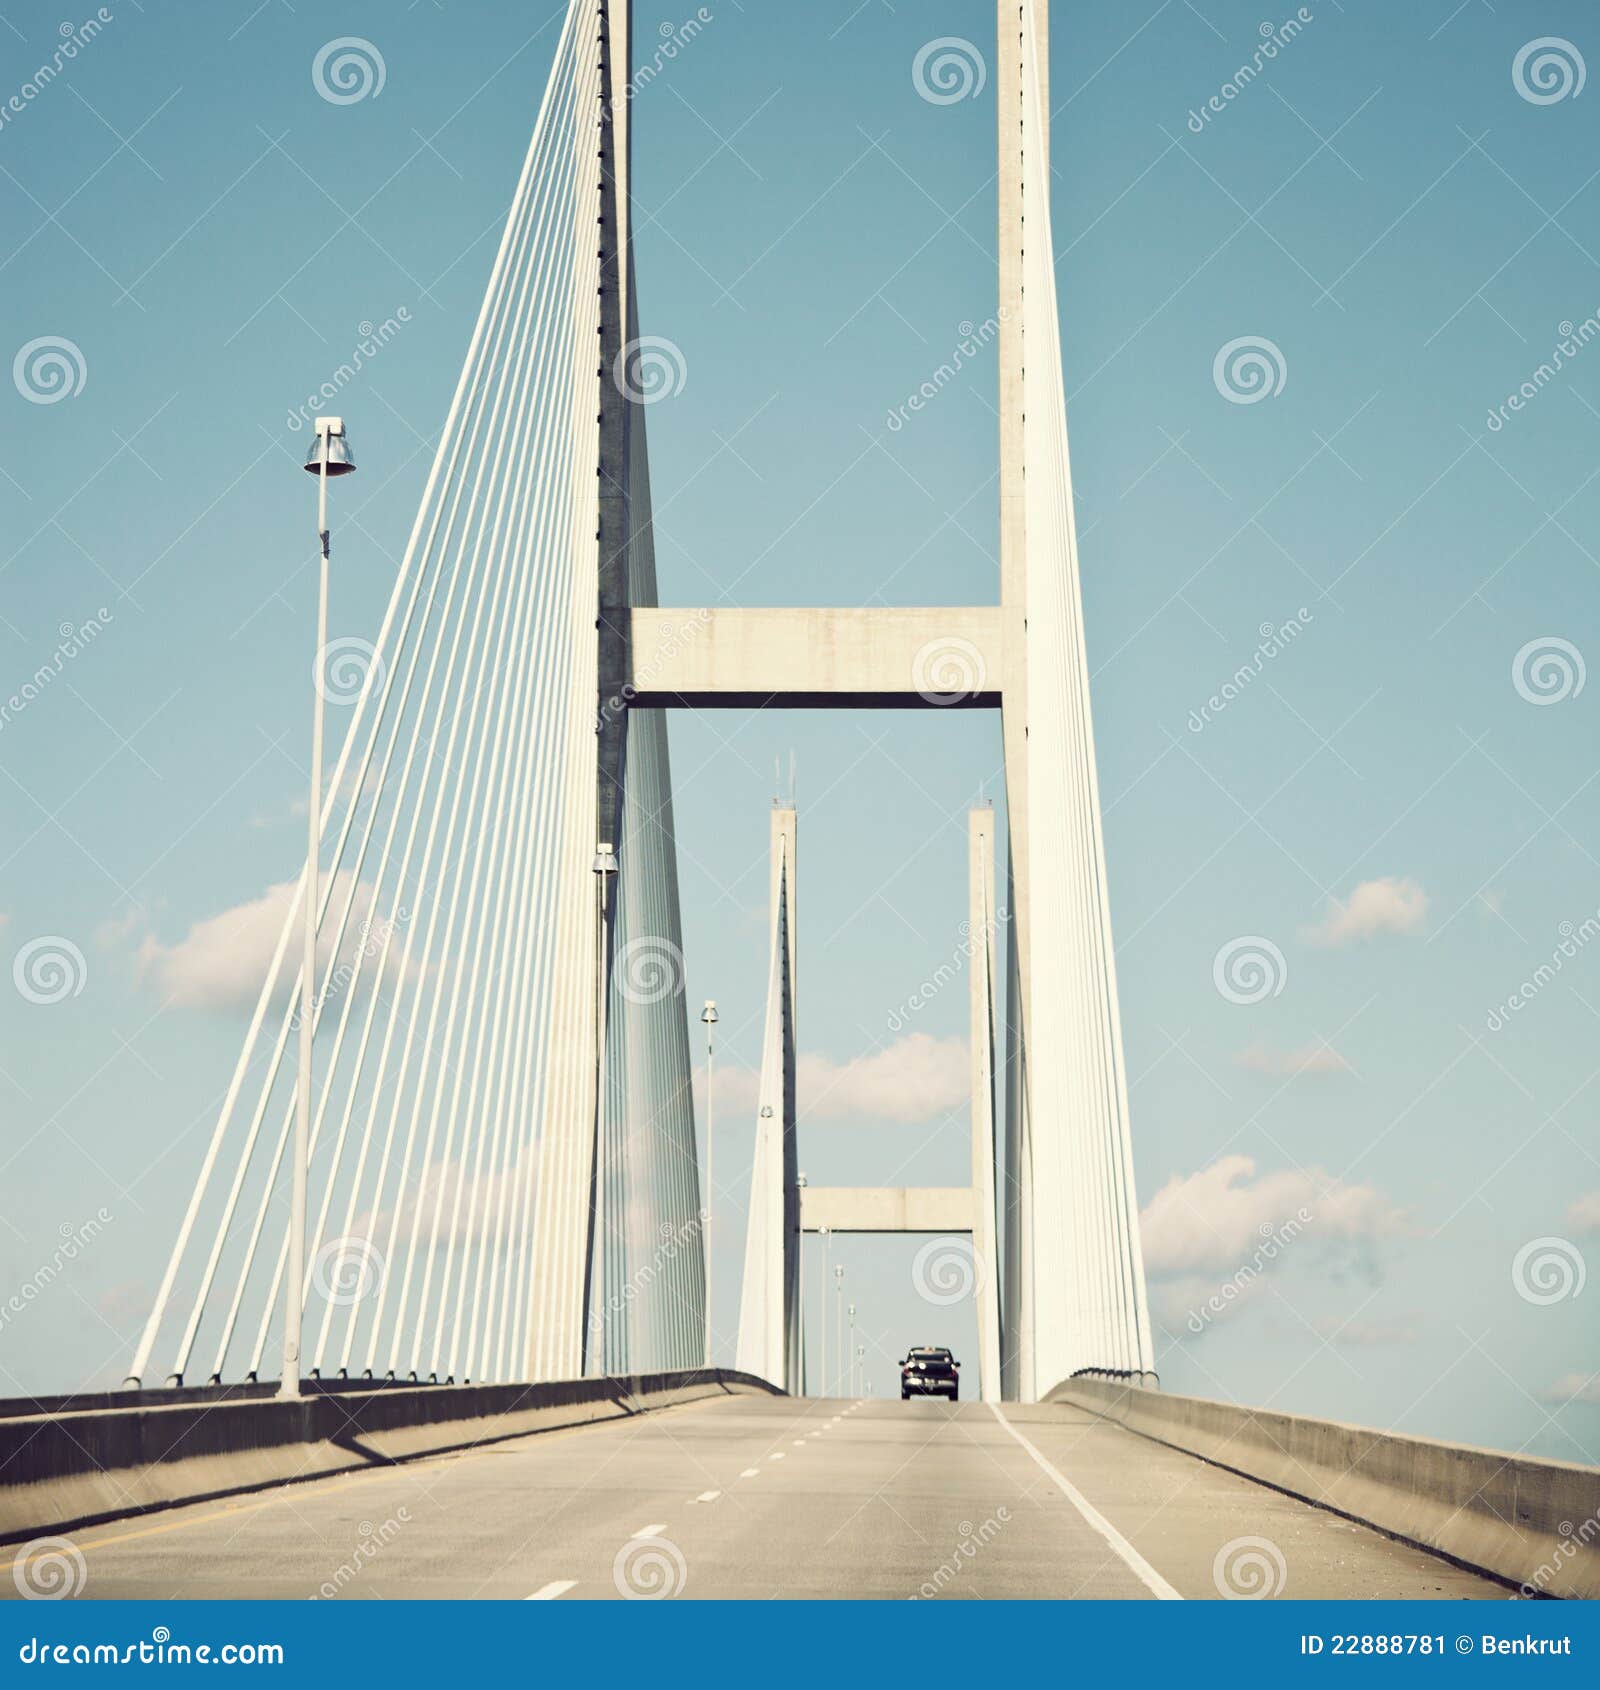 sidney lanier bridge